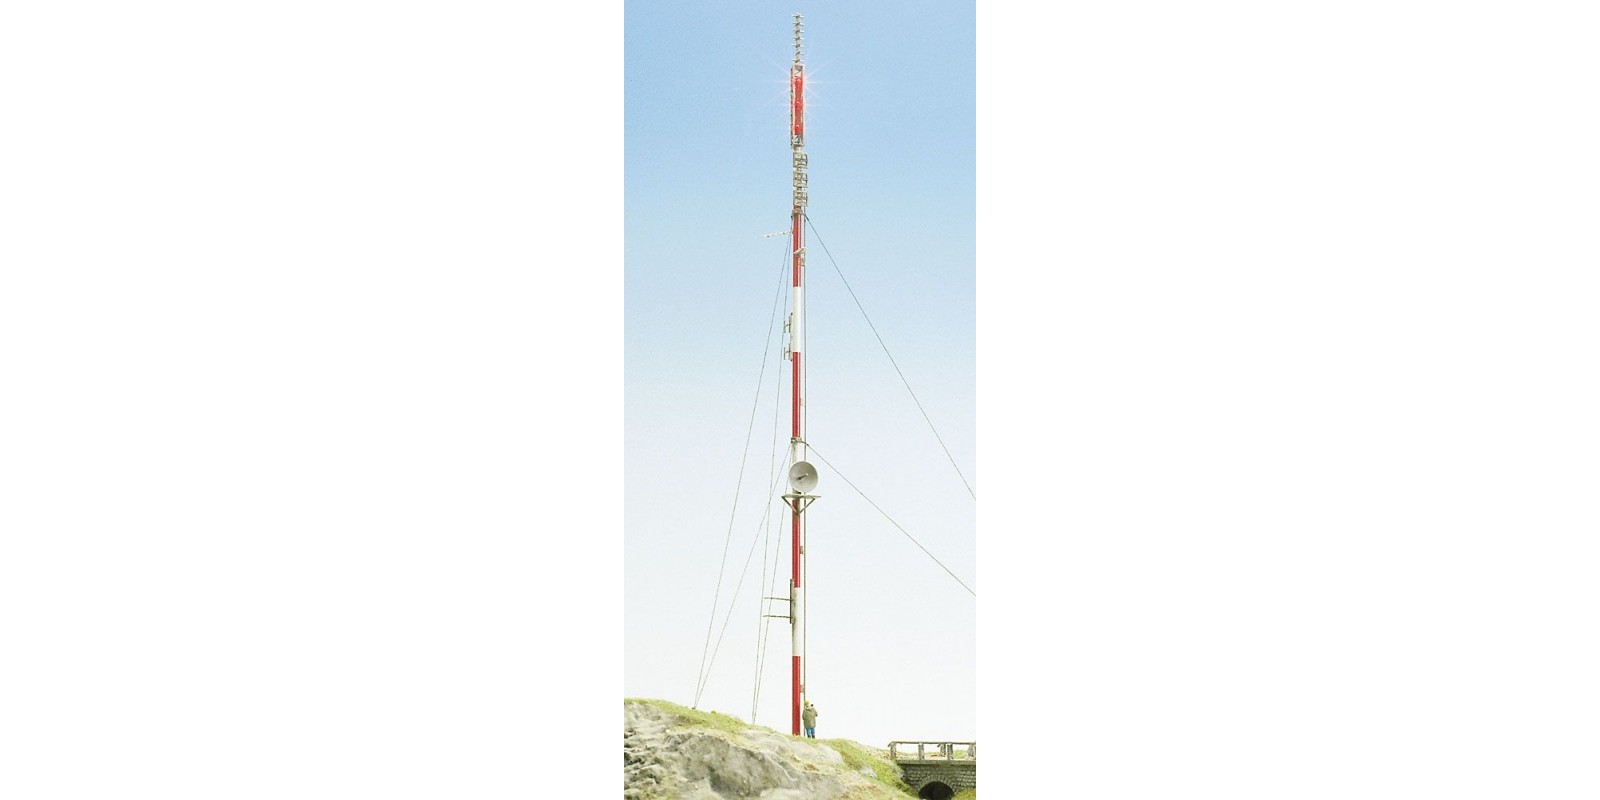 BU5965 Transmitter Mast